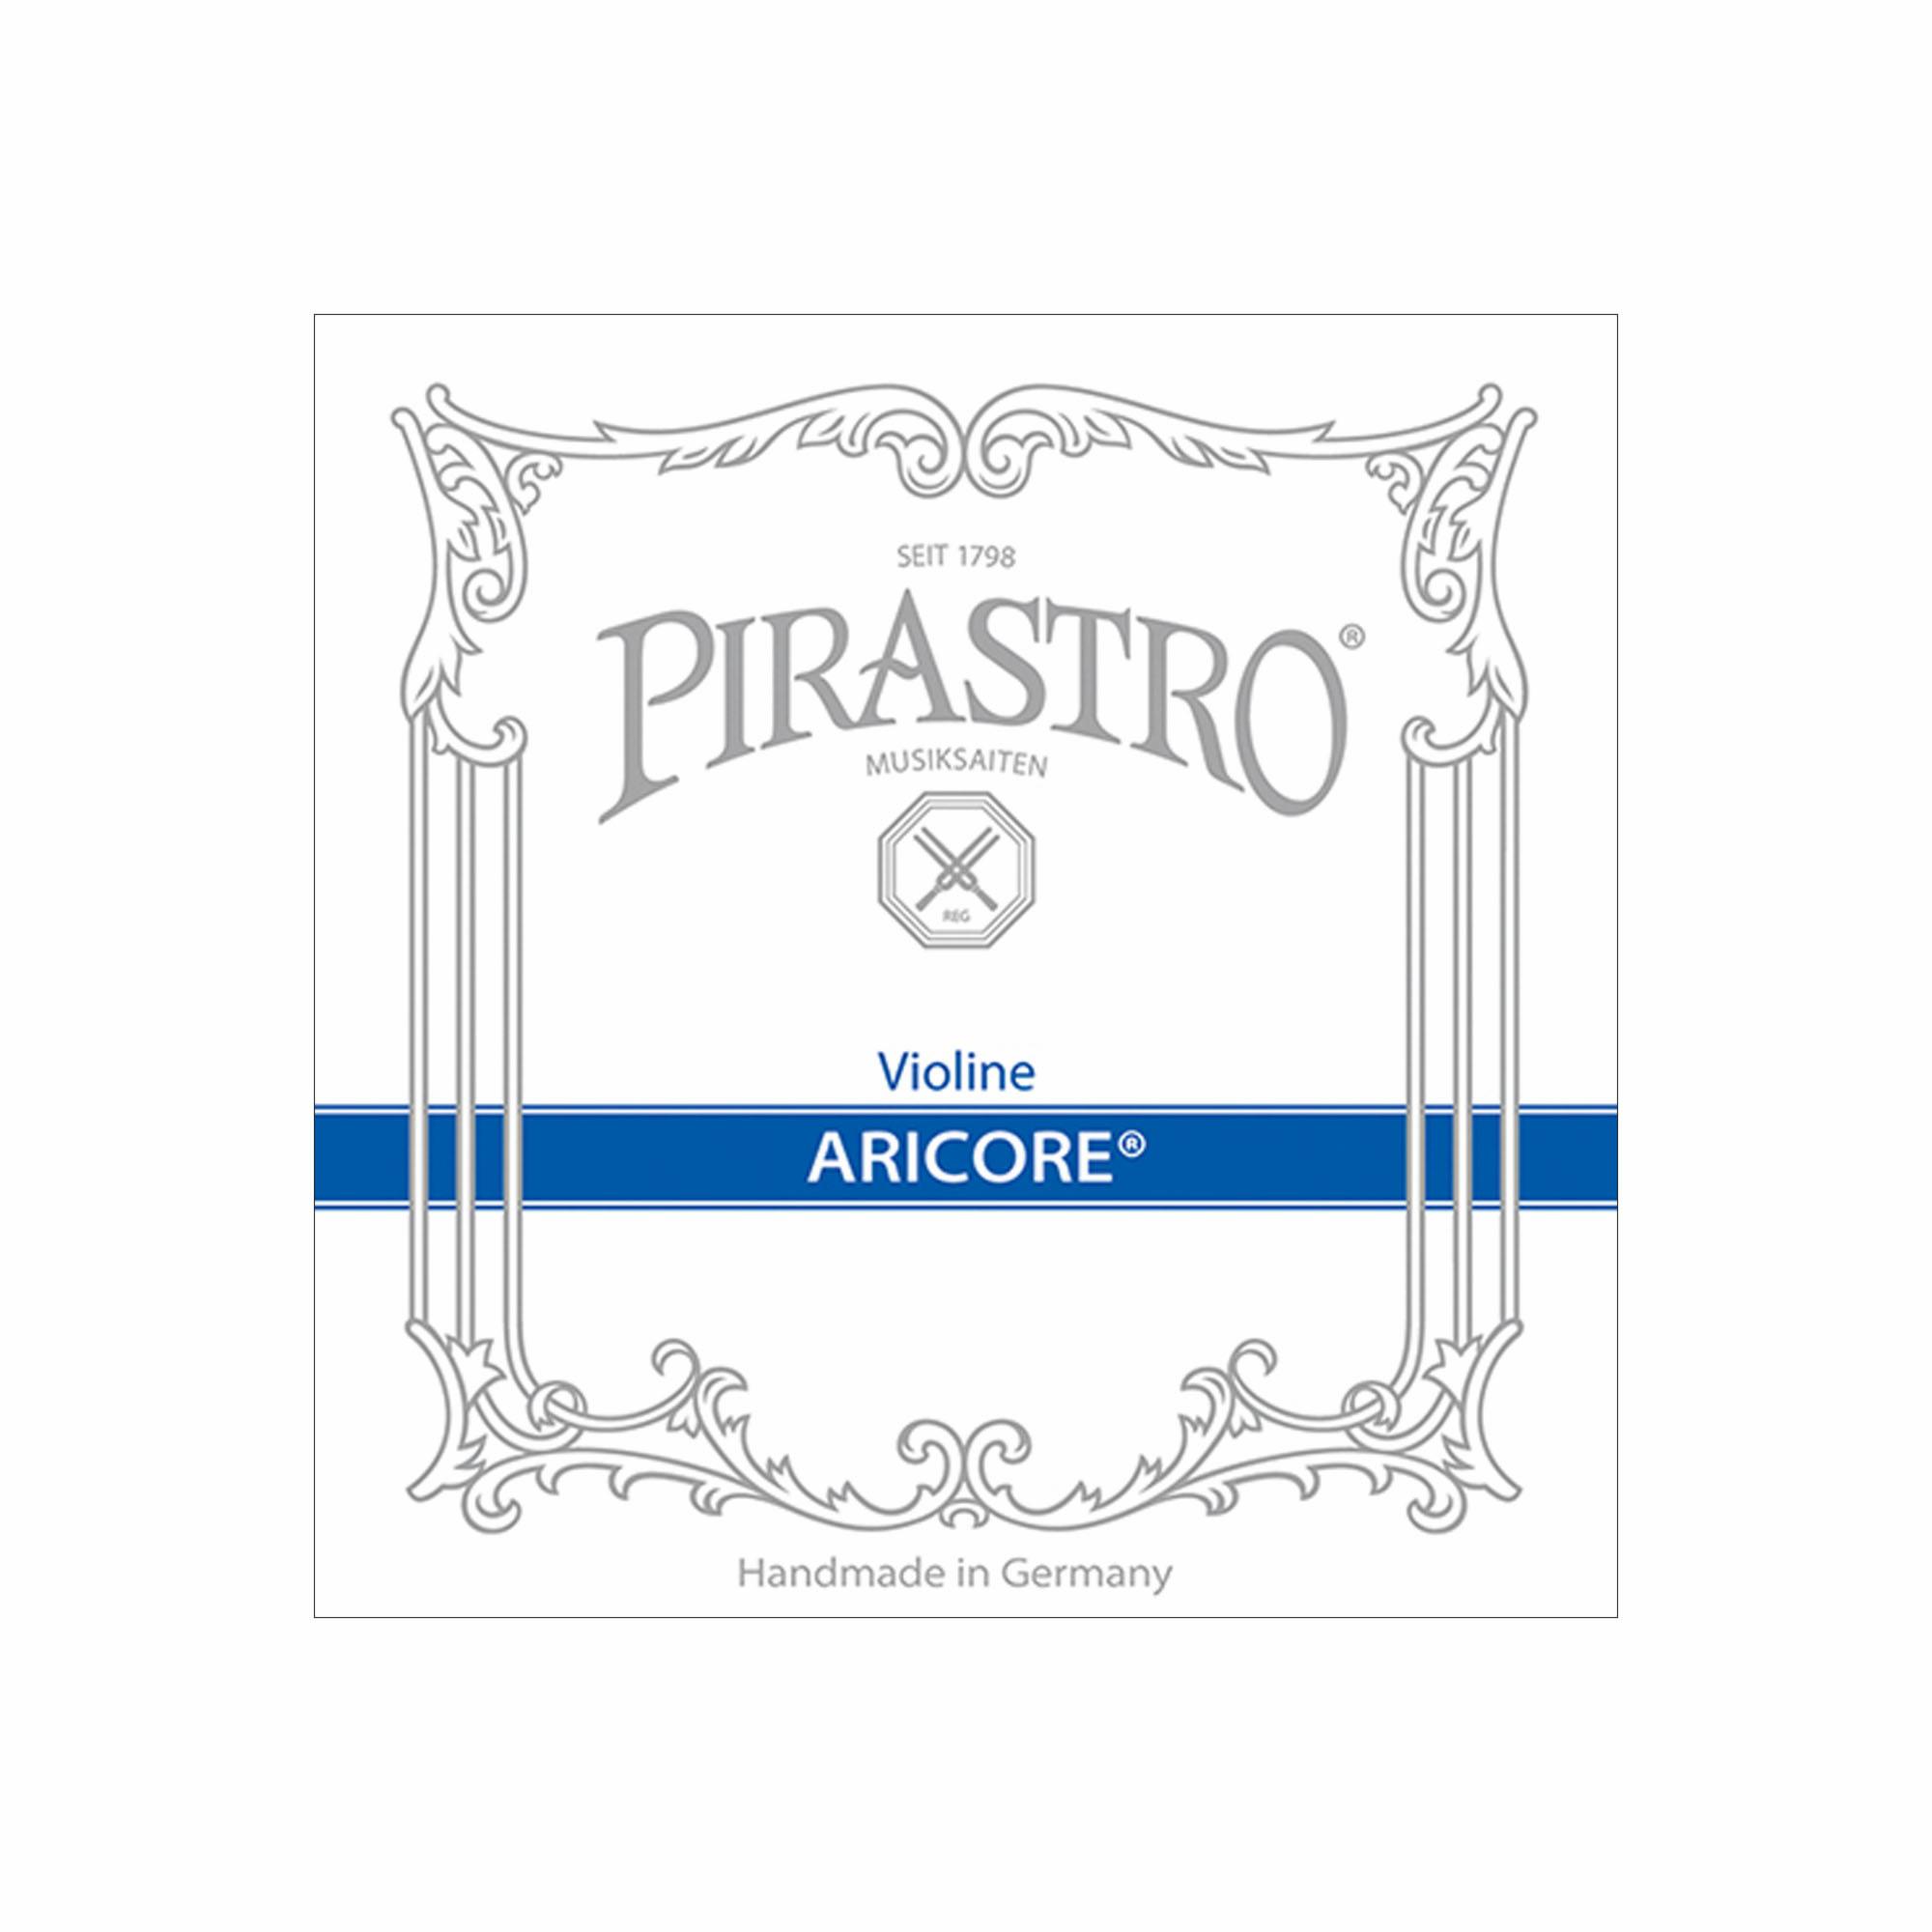 Pirastro Aricore Violin Strings